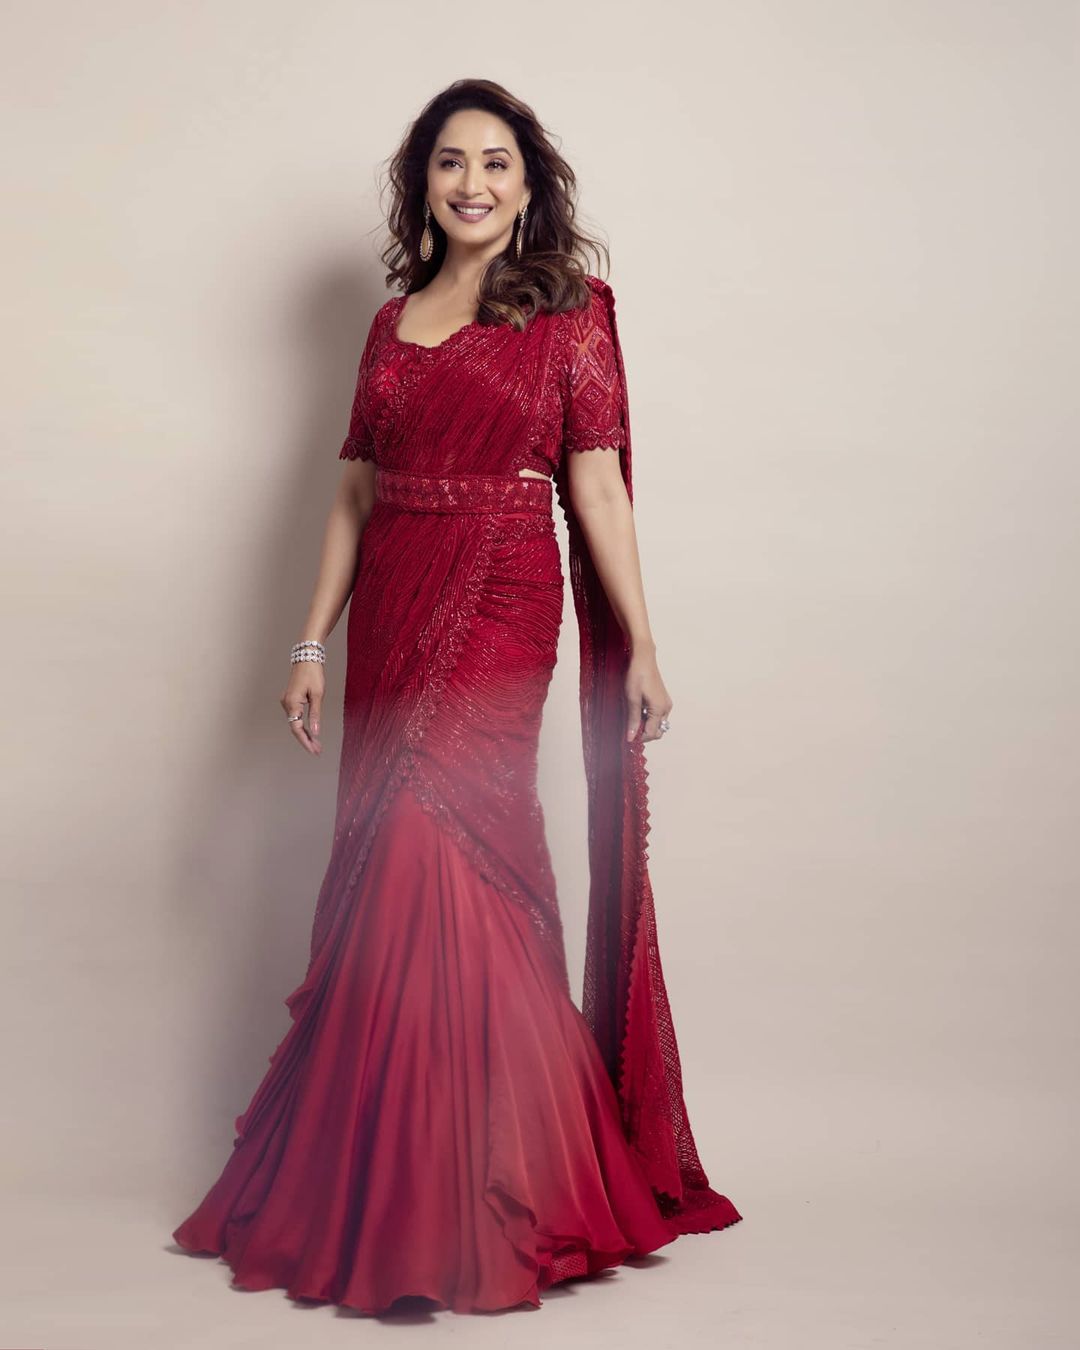  Madhuri Dixit Nene looks sexy in the deep red lehenga saree. (Image: Instagram)